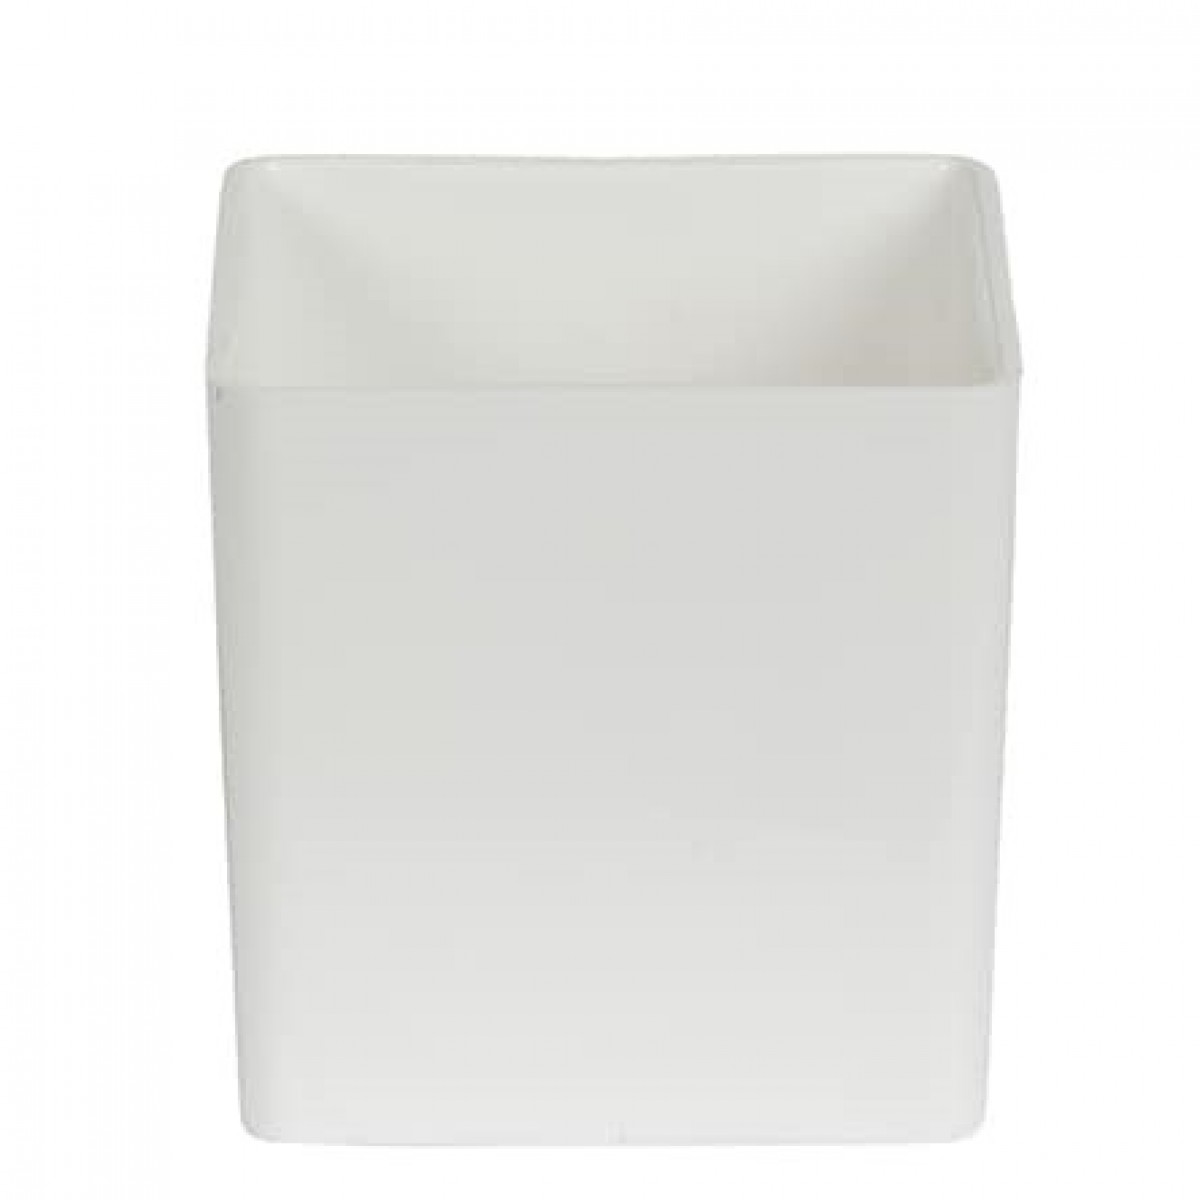 5110 Cube White 10x10x10cm Acrylic Vase - 1 No